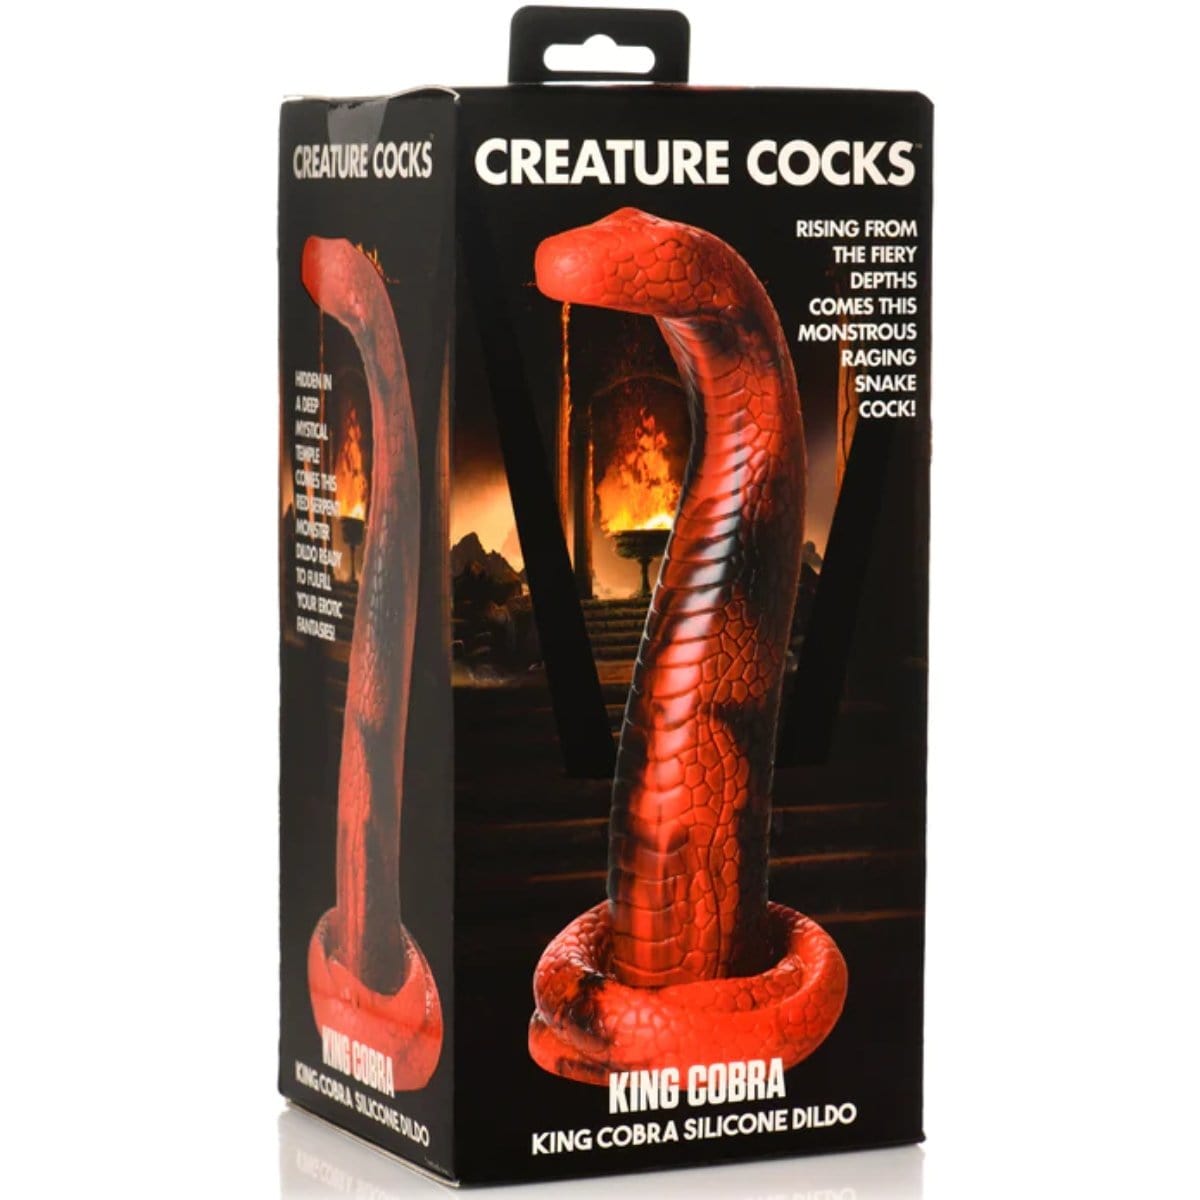 Creature Cocks - King Cobra Silicone Dildo | 10 inches creature cocks - For Me To Love